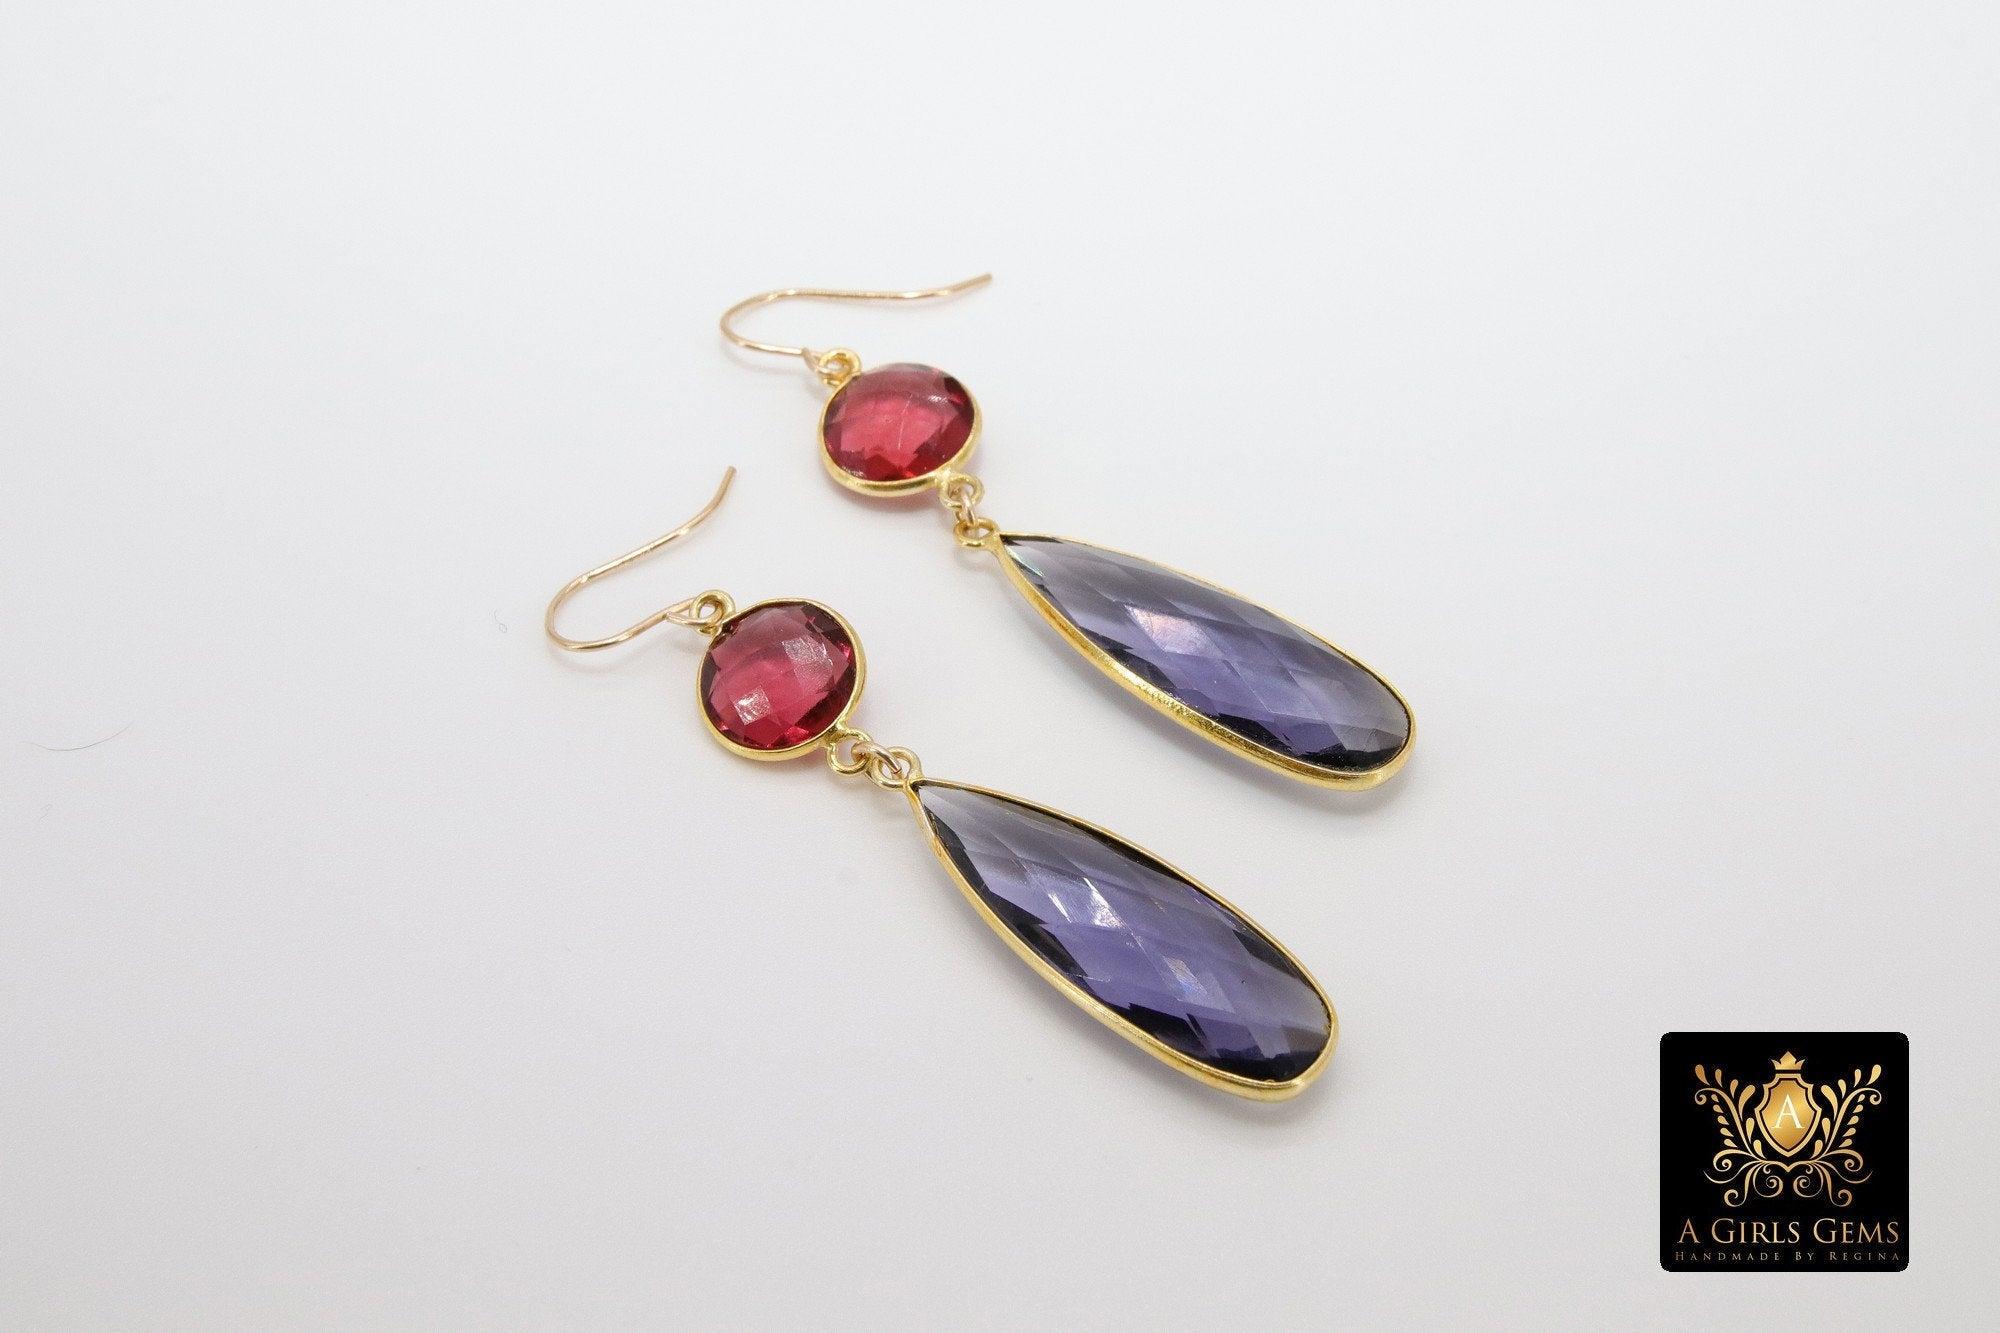 14 K Gold Aquamarine Earrings, Ruby Gemstones, Dangle Ear Wire Hooks - A Girls Gems